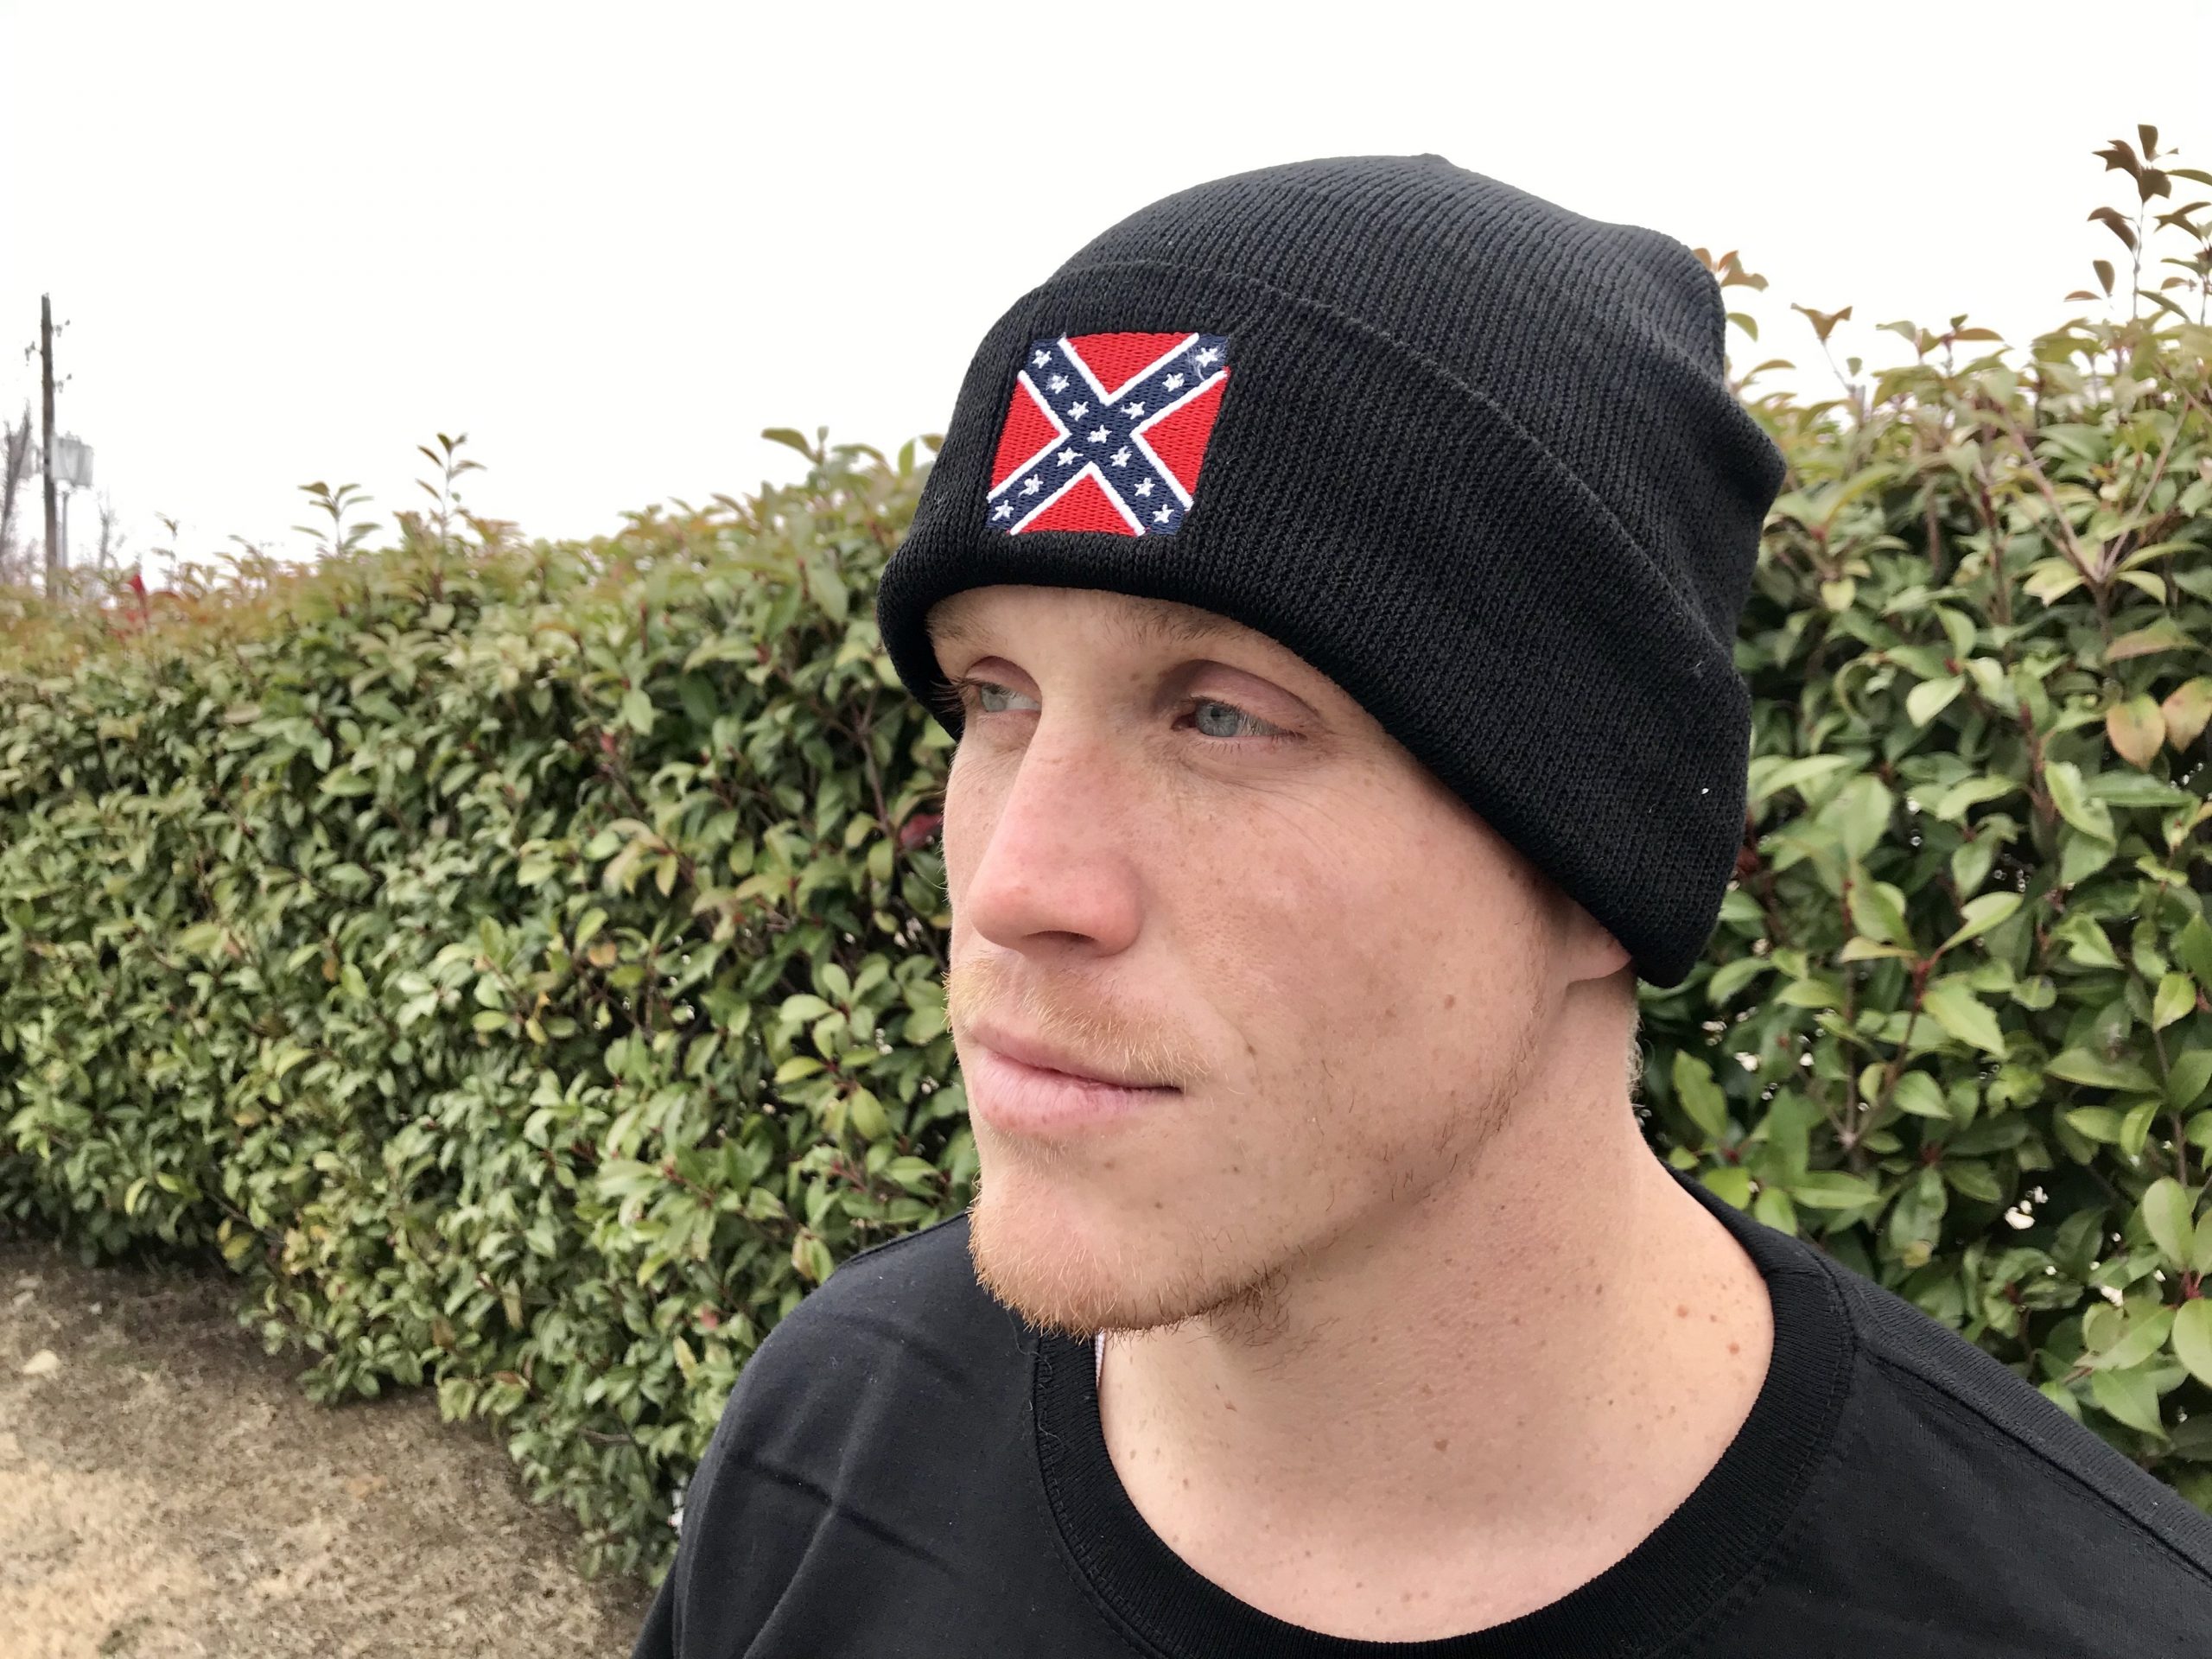 Stylish Confederate Rebel Hat at a super price